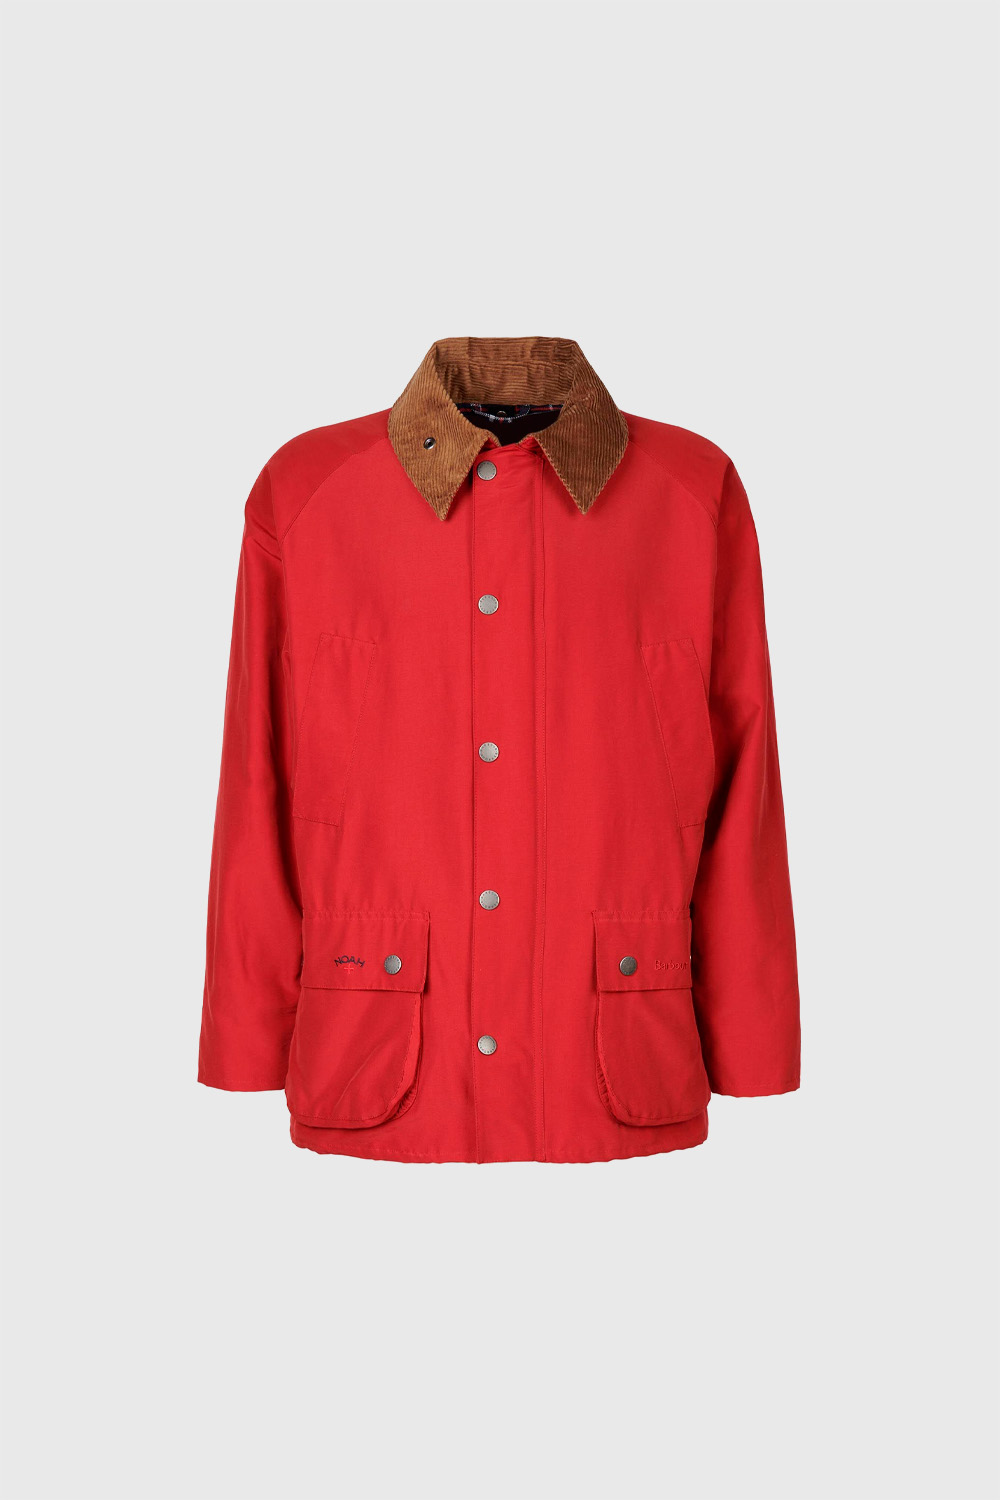 NOAH Barbour 60／40 Bedale Jacket(Red)-